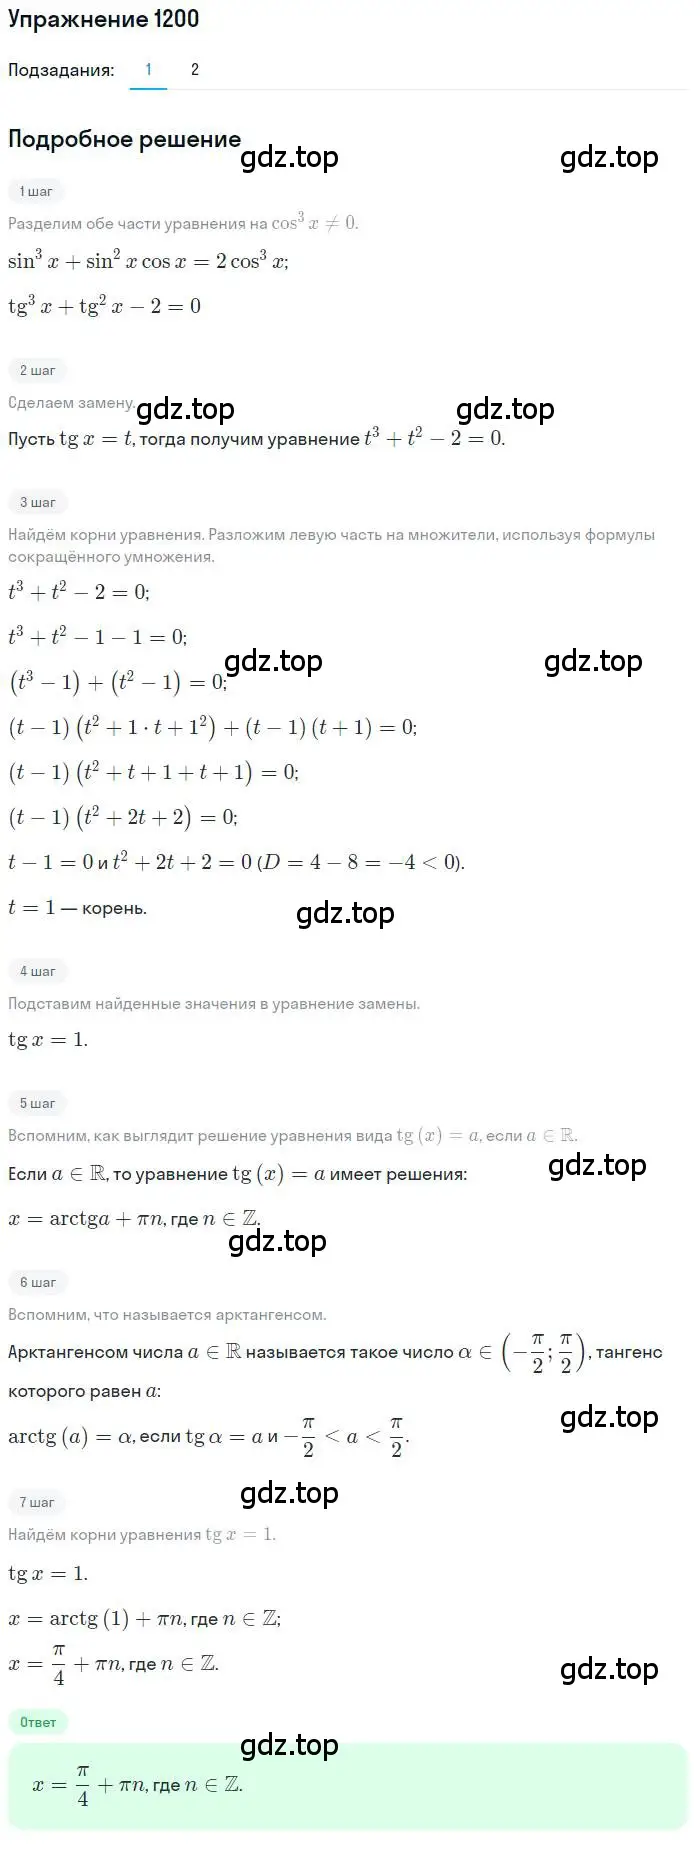 Решение номер 1200 (страница 341) гдз по алгебре 10 класс Колягин, Шабунин, учебник